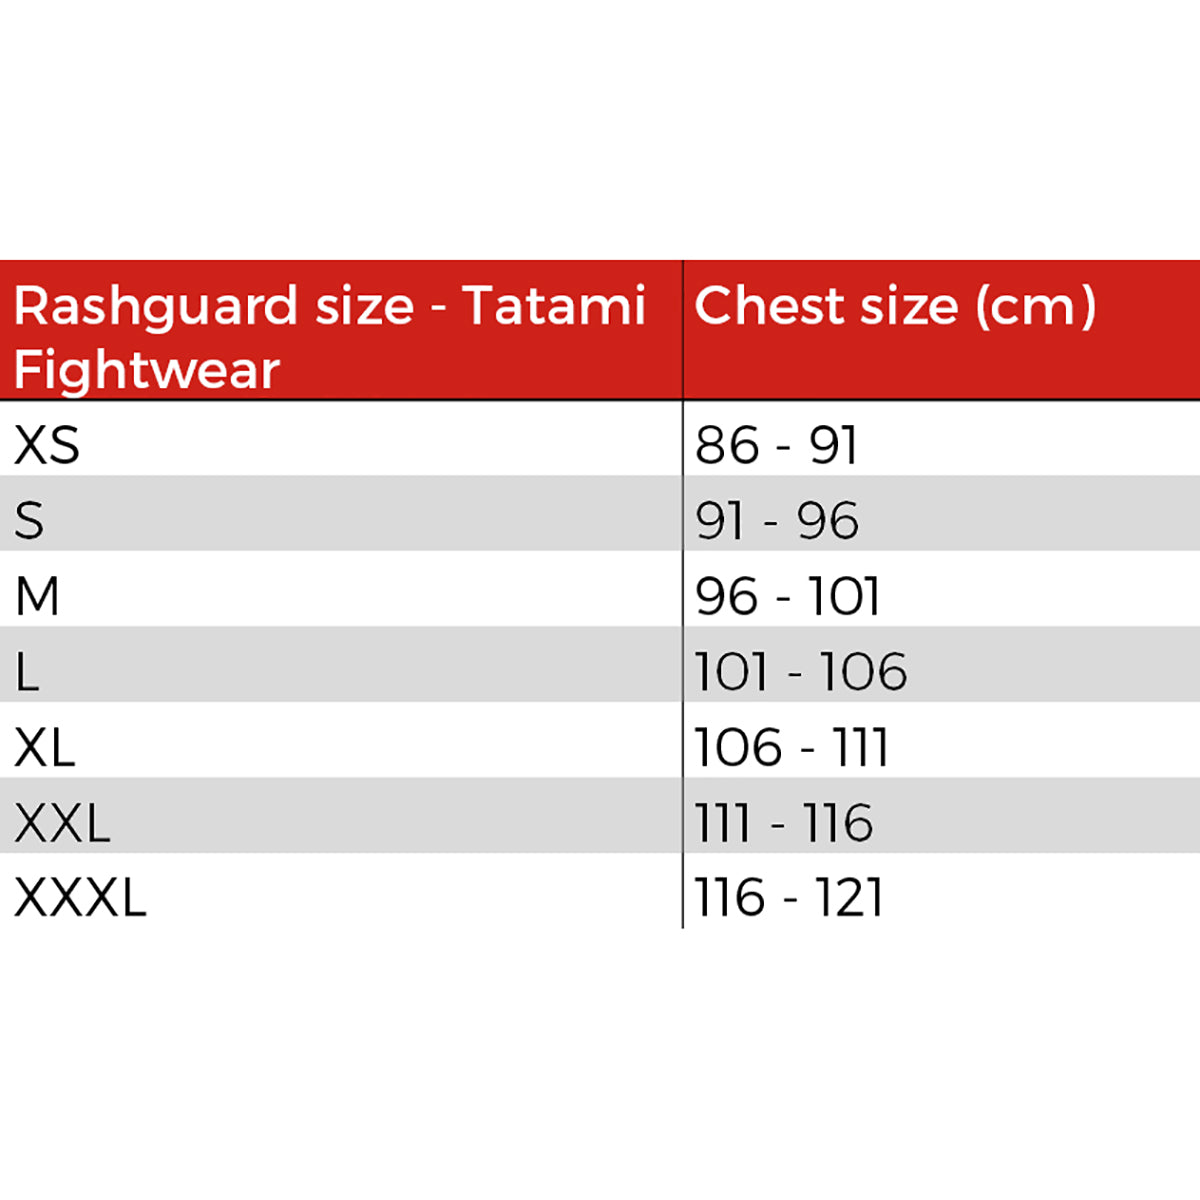 Tatami Fightwear Katakana Long Sleeve Rashguard - Black Tatami Fightwear